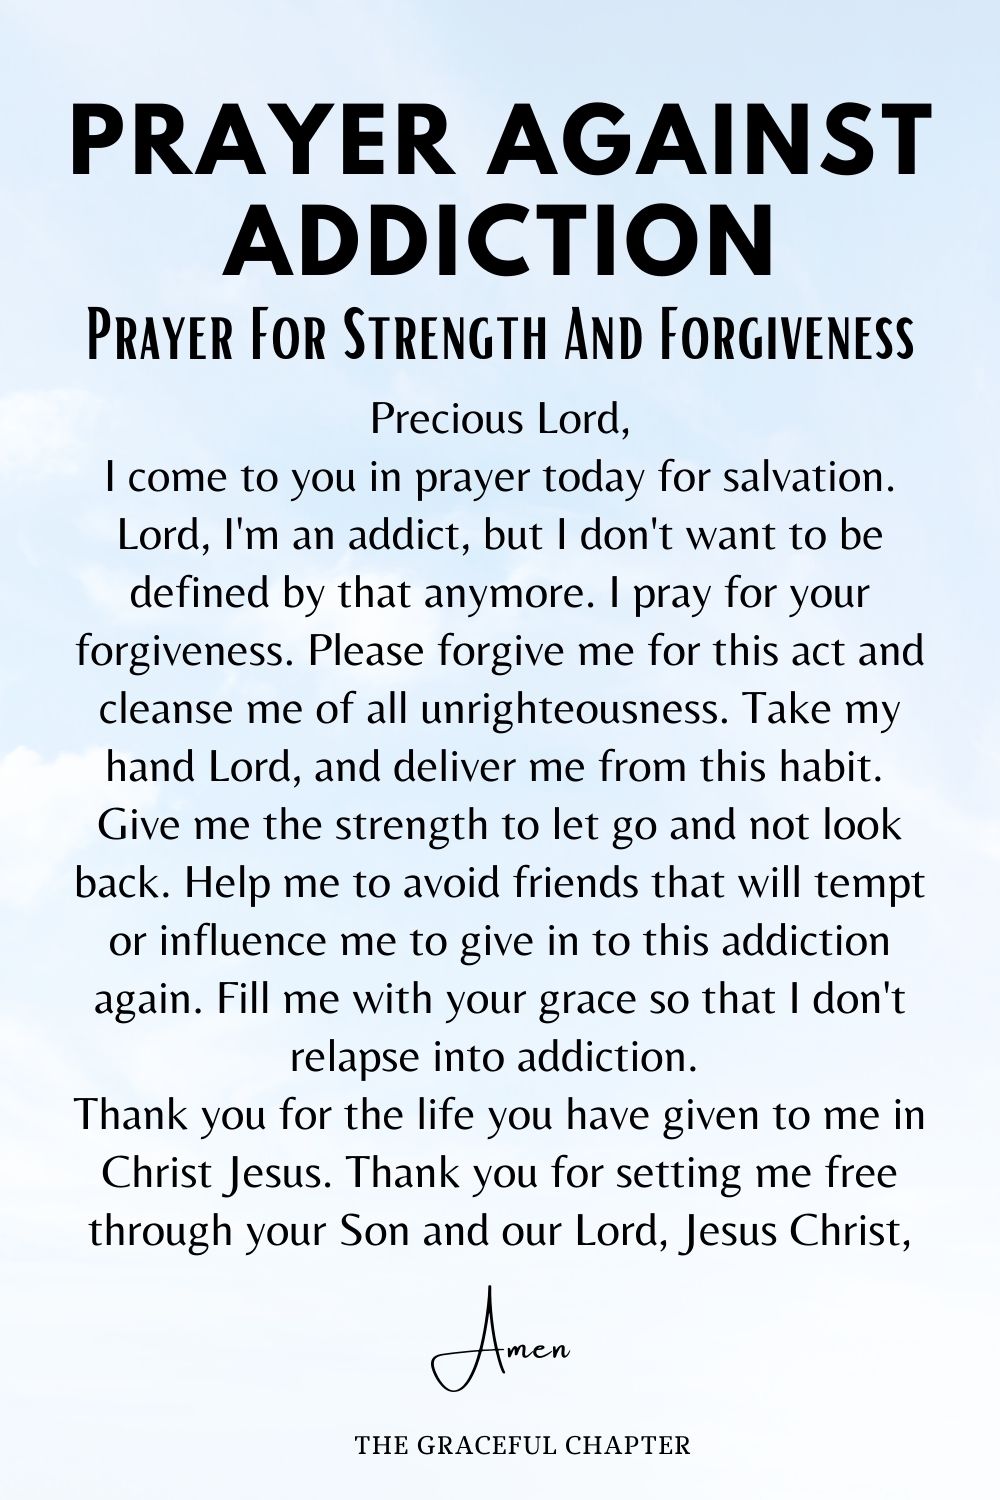 Prayer for strength and forgiveness - prayers against addiction